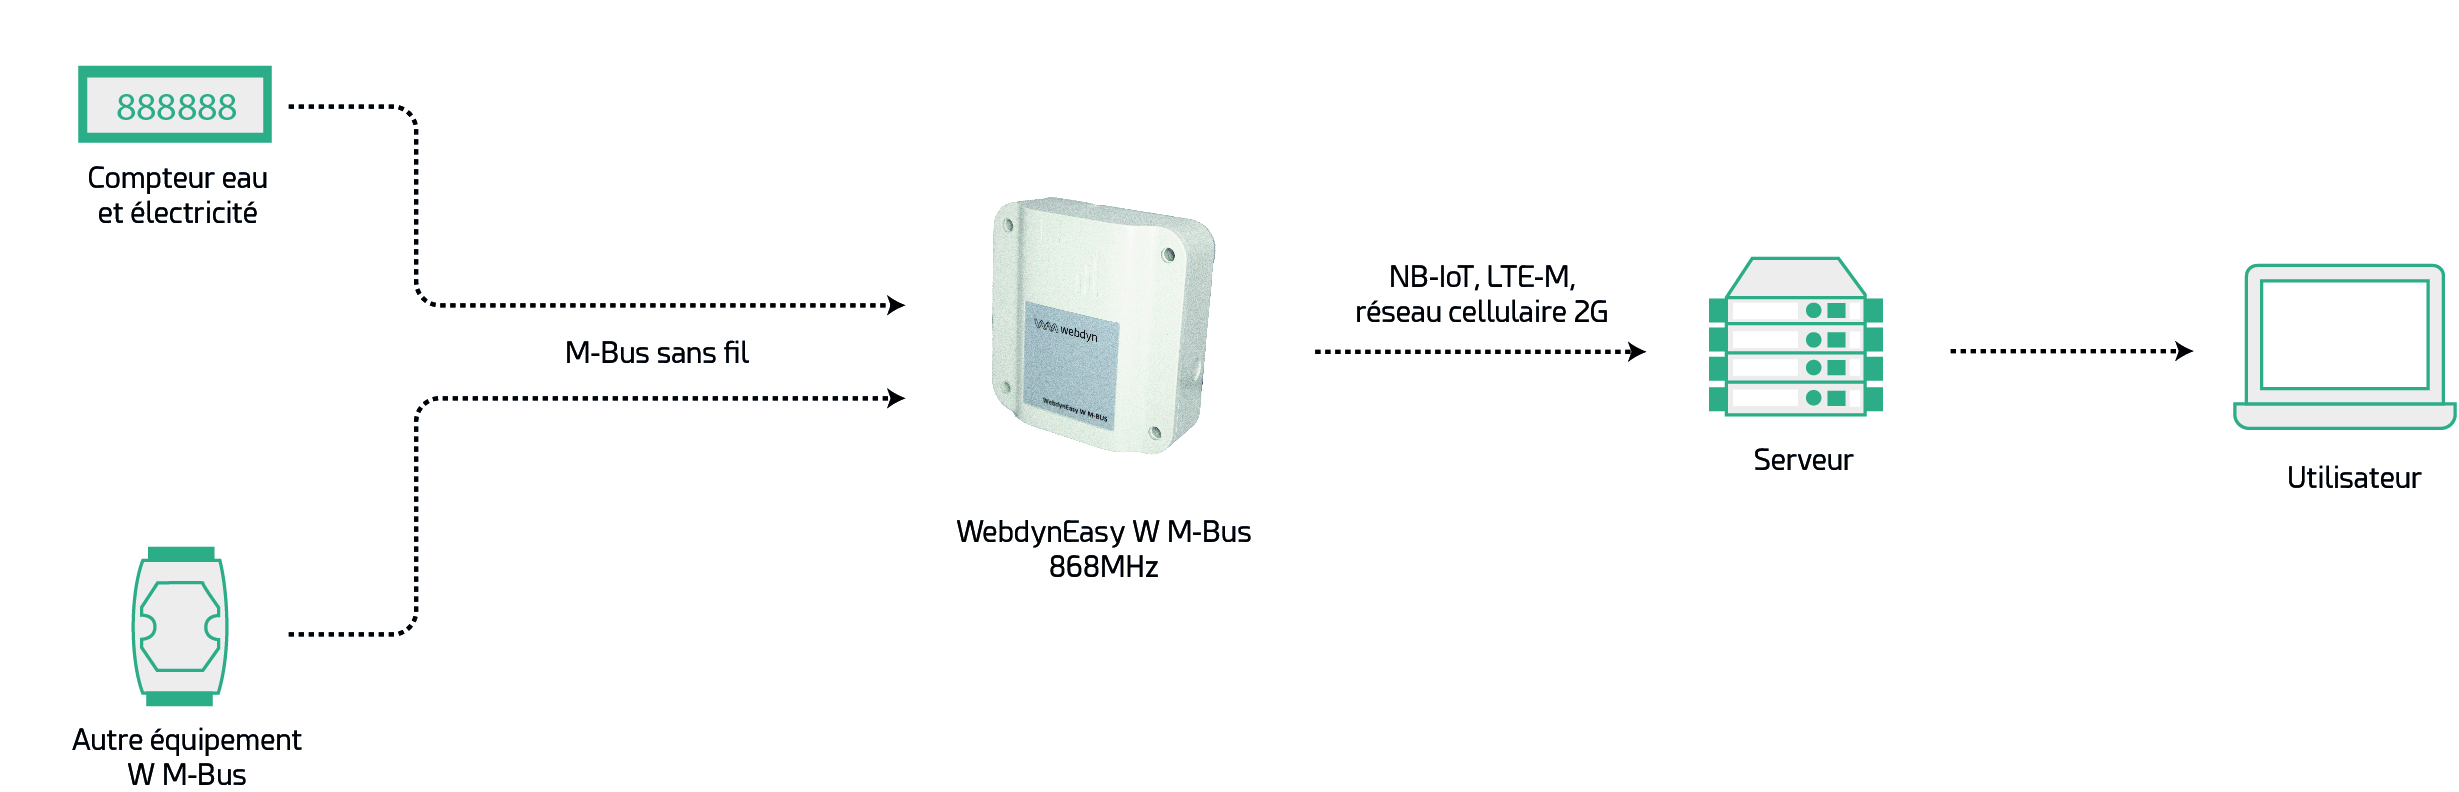 Architecture - WebdynEasy W M-Bus 868MHz-FR